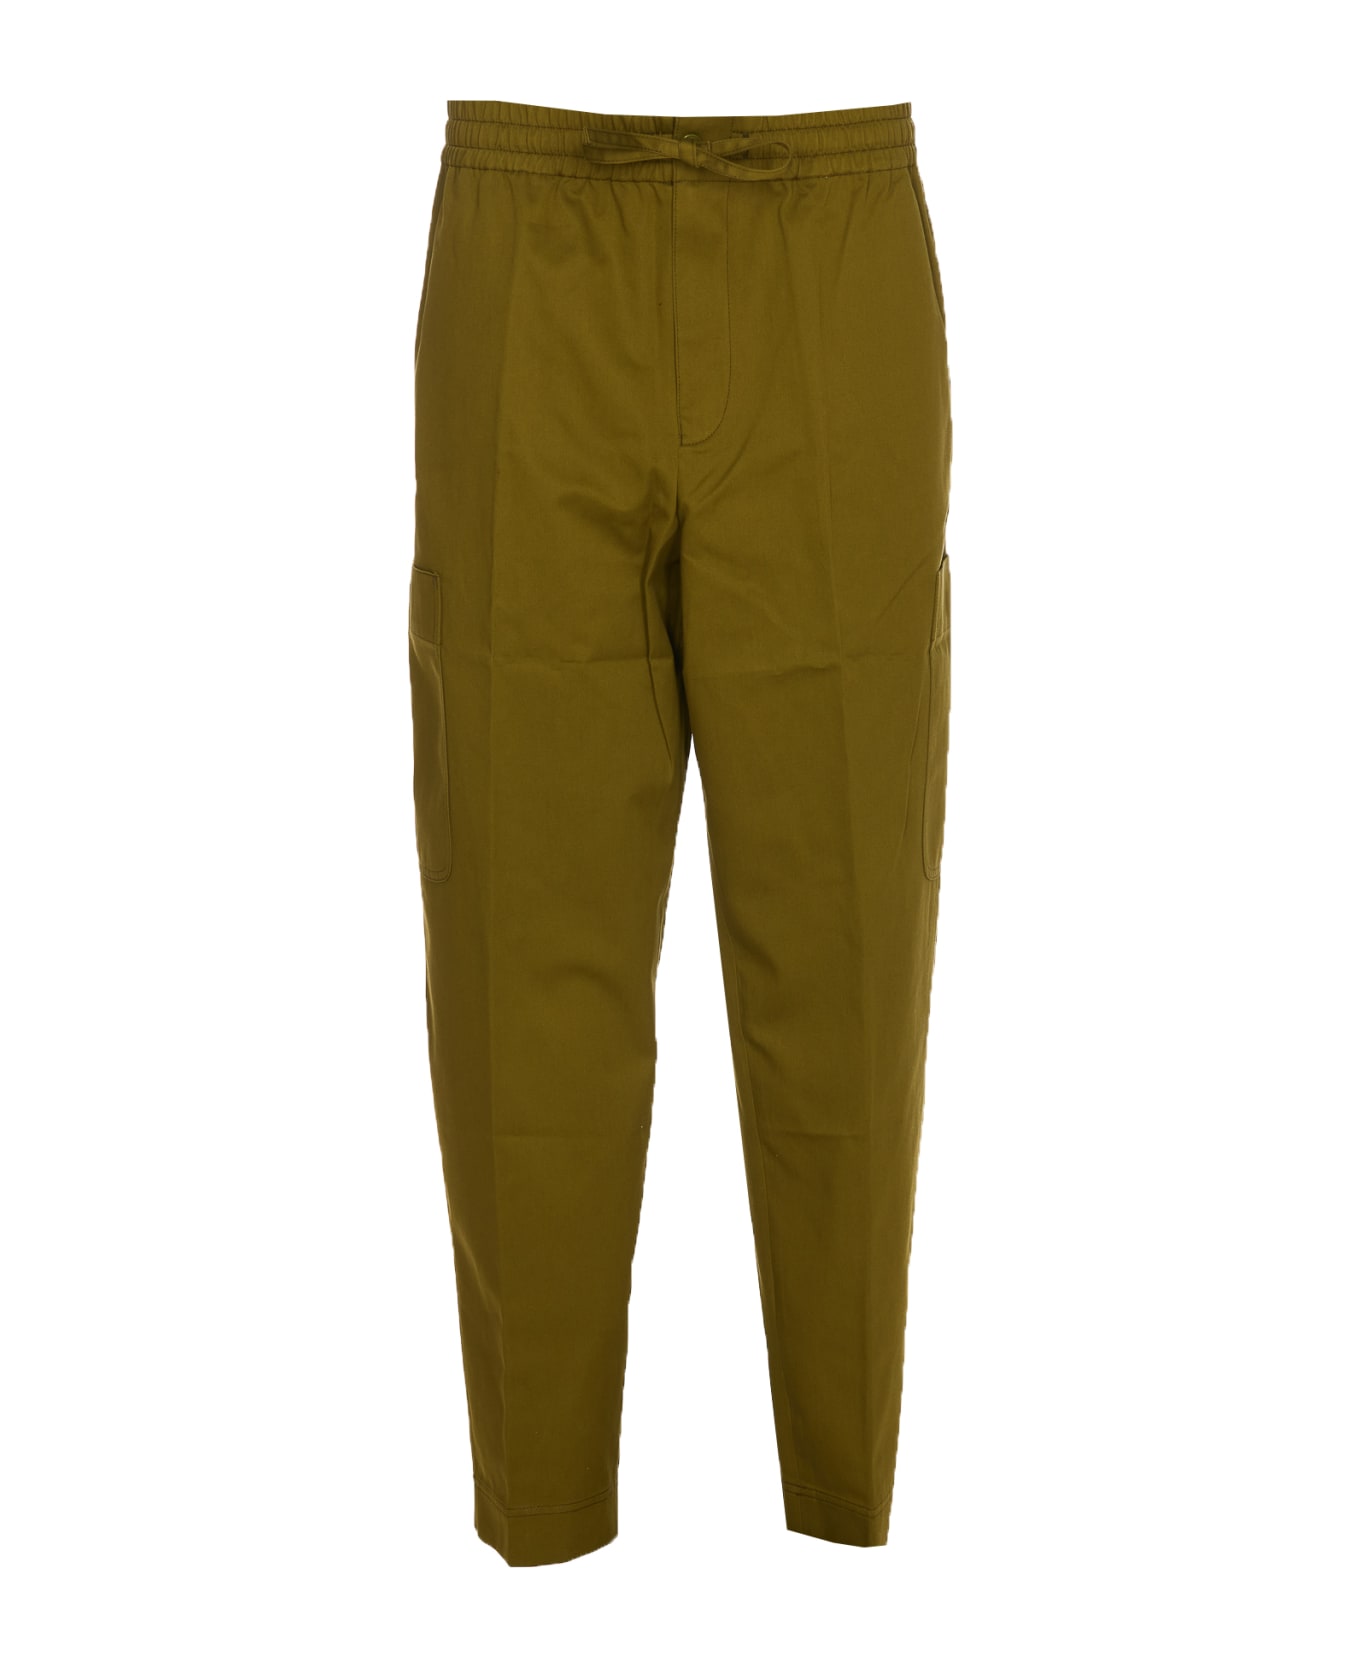 Kenzo Cotton Cargo Pants - OLIVE